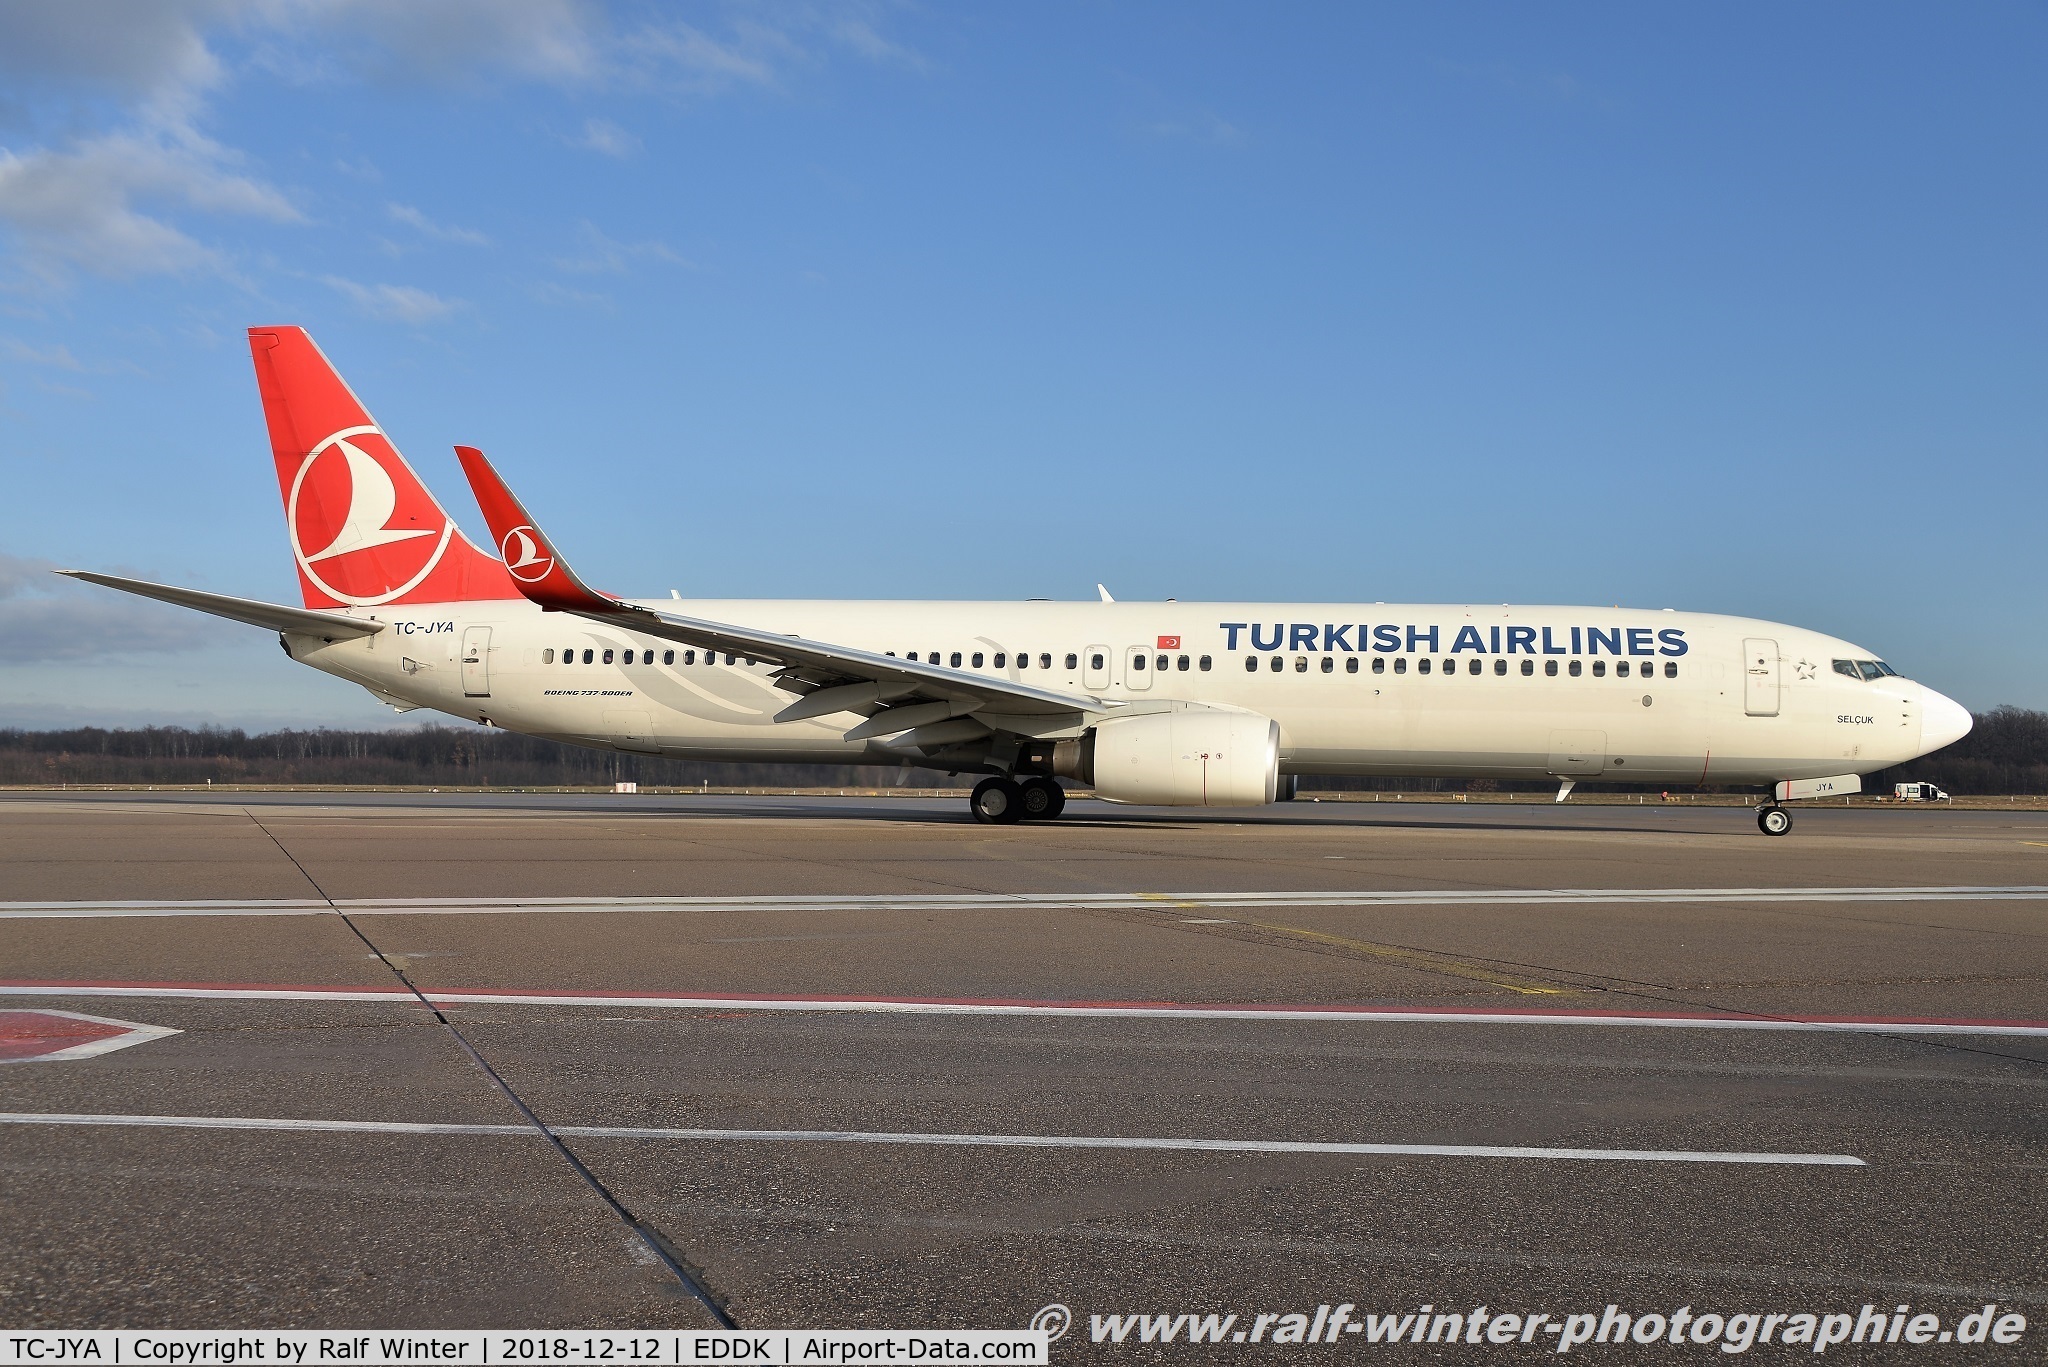 TC-JYA, 2011 Boeing 737-9F2/ER C/N 40973, Boeing 737-9F2ER(W) - TK THY Turkish Airlines 'Amasya' - 40973 - TC-JYA - 12.12.2018 - CGN